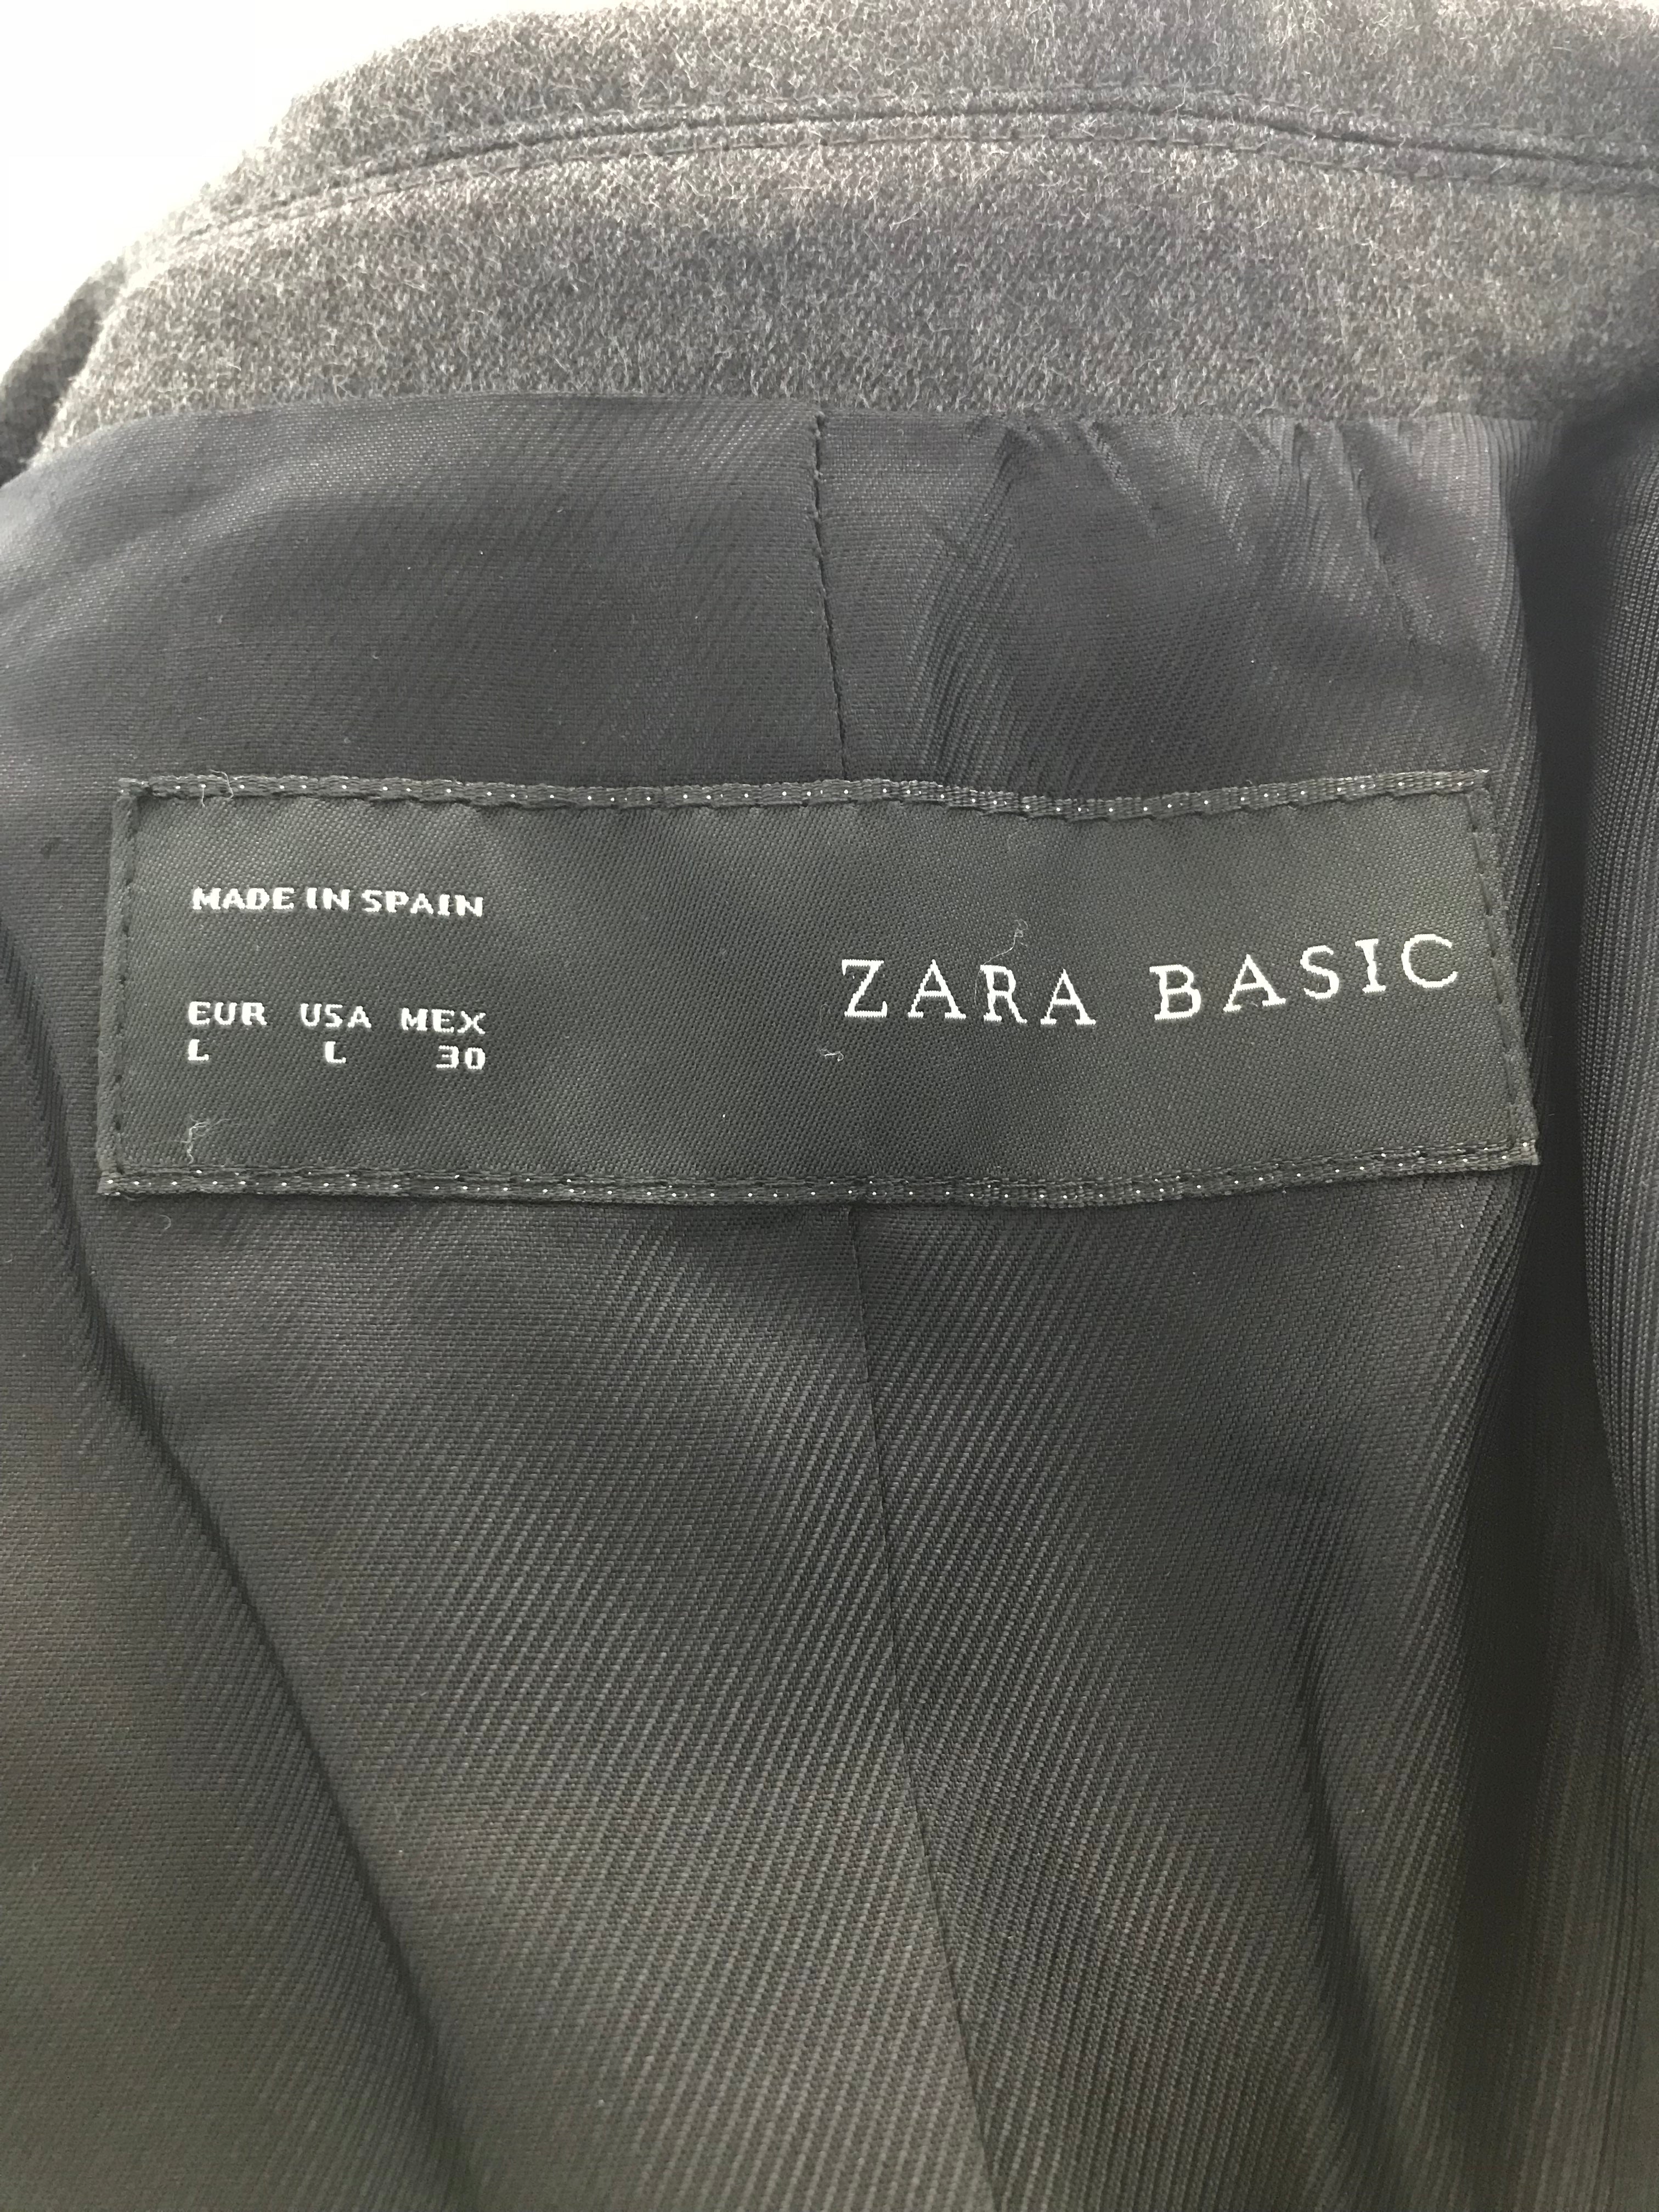 zara basic jacket women's